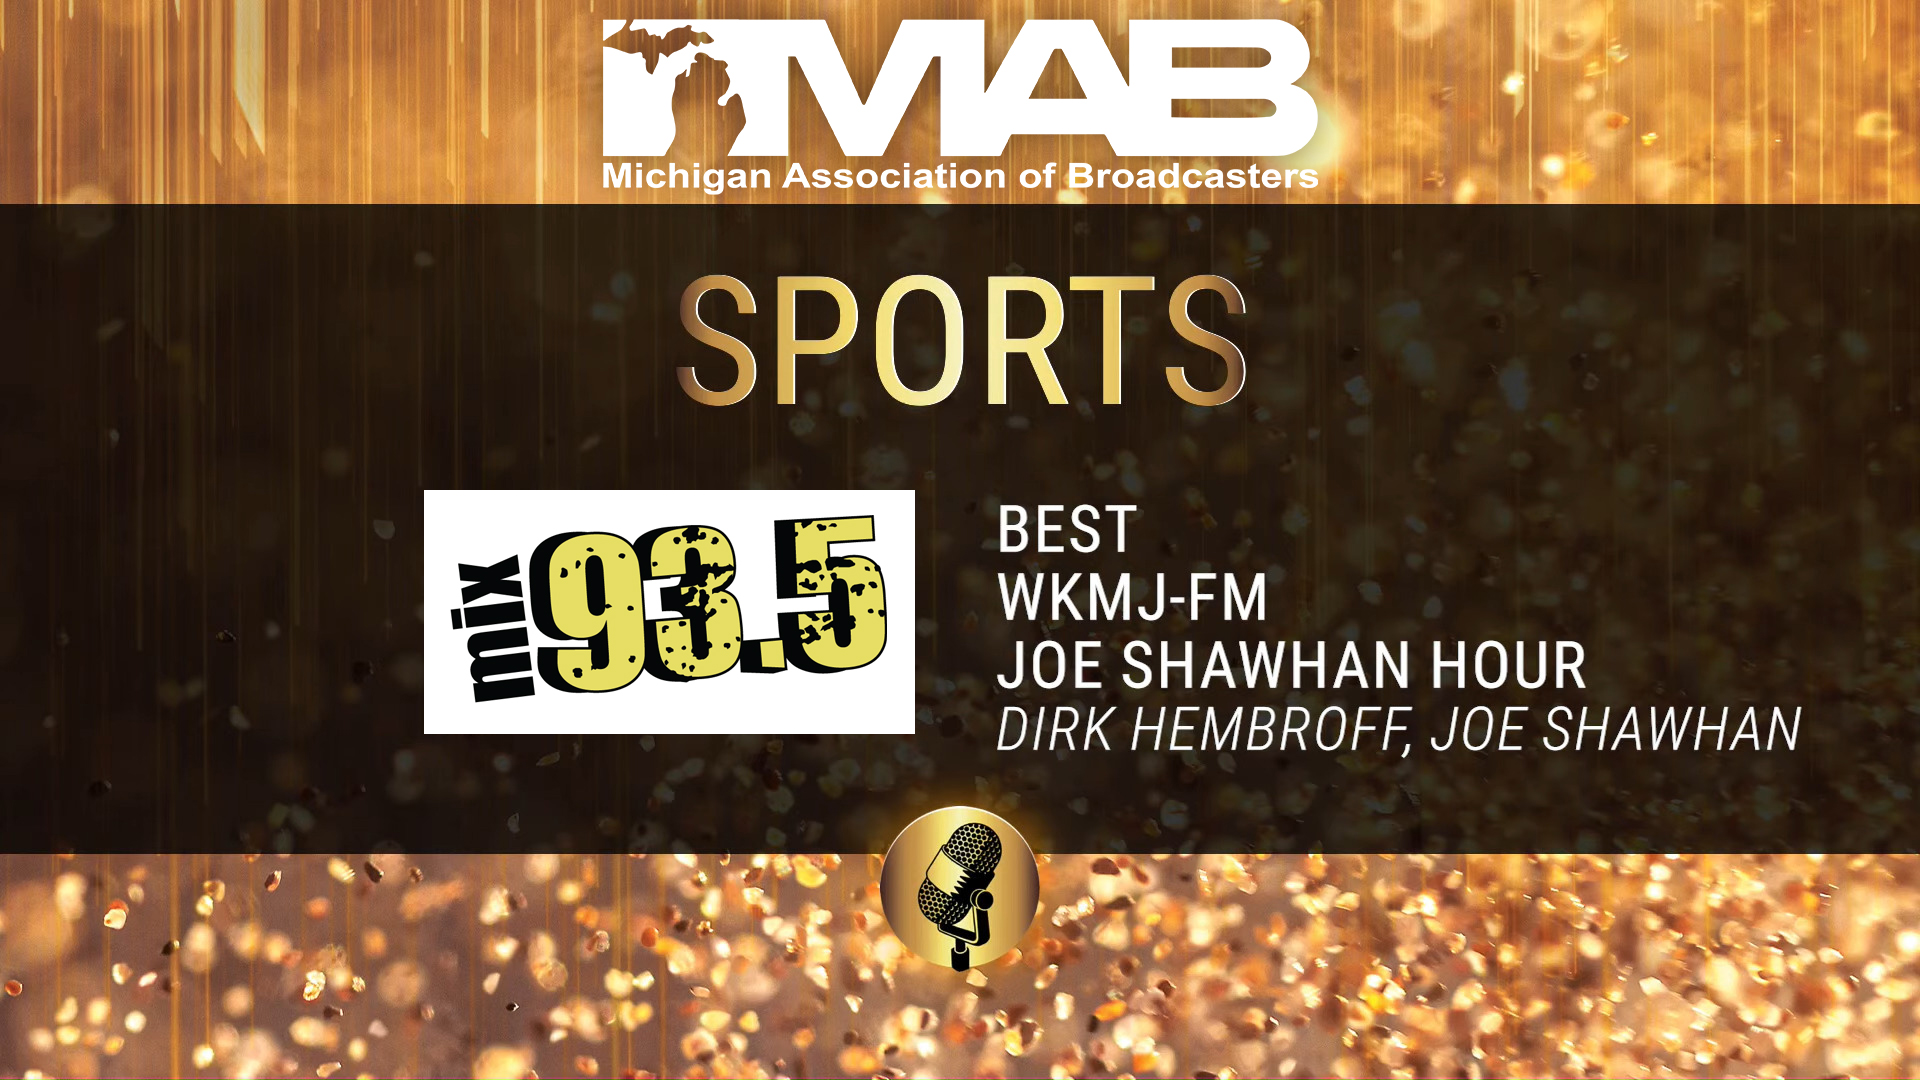 Joe Shawhan Hour receives MAB Broadcast Excellence Award